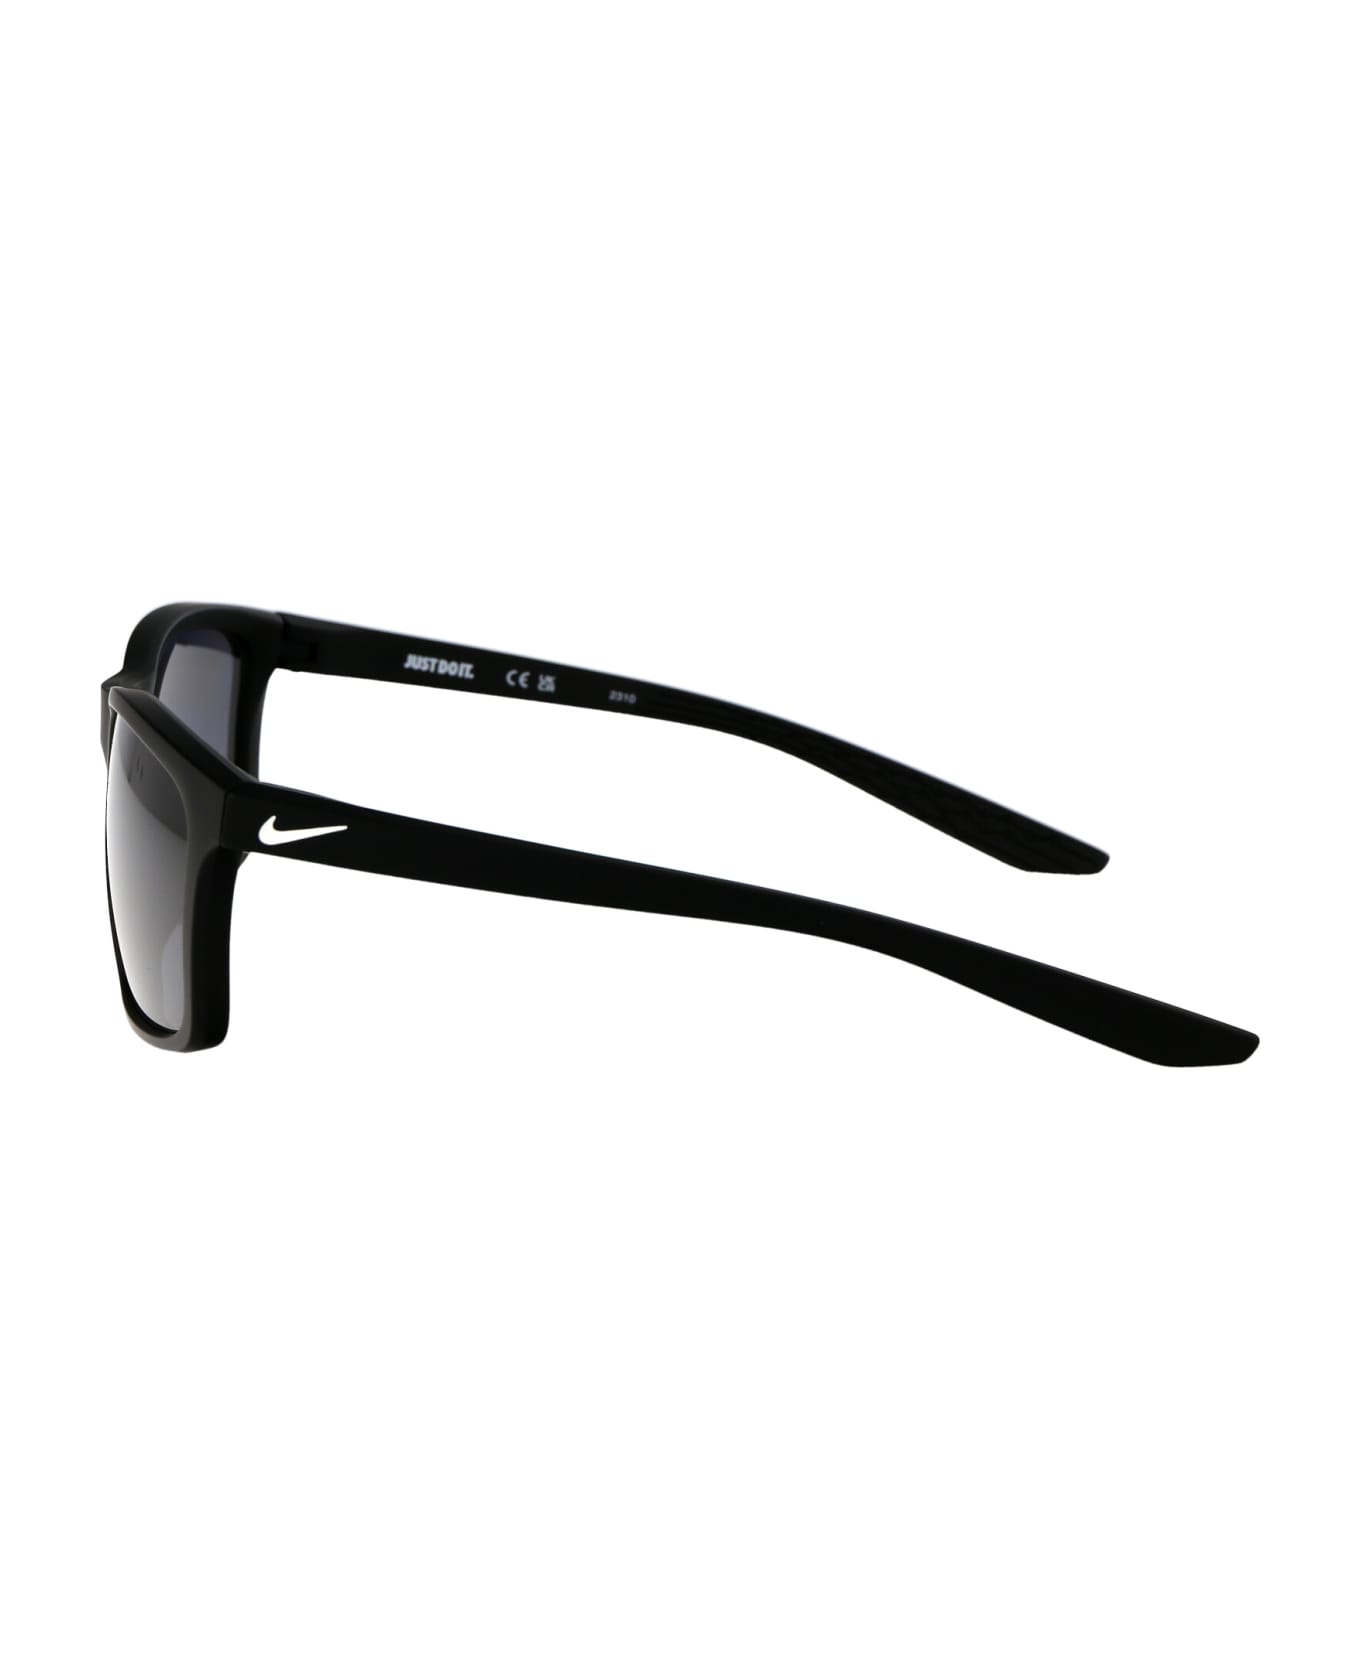 Nike Valiant Sunglasses - 010 DARK GREY MATTE BLACK サングラス